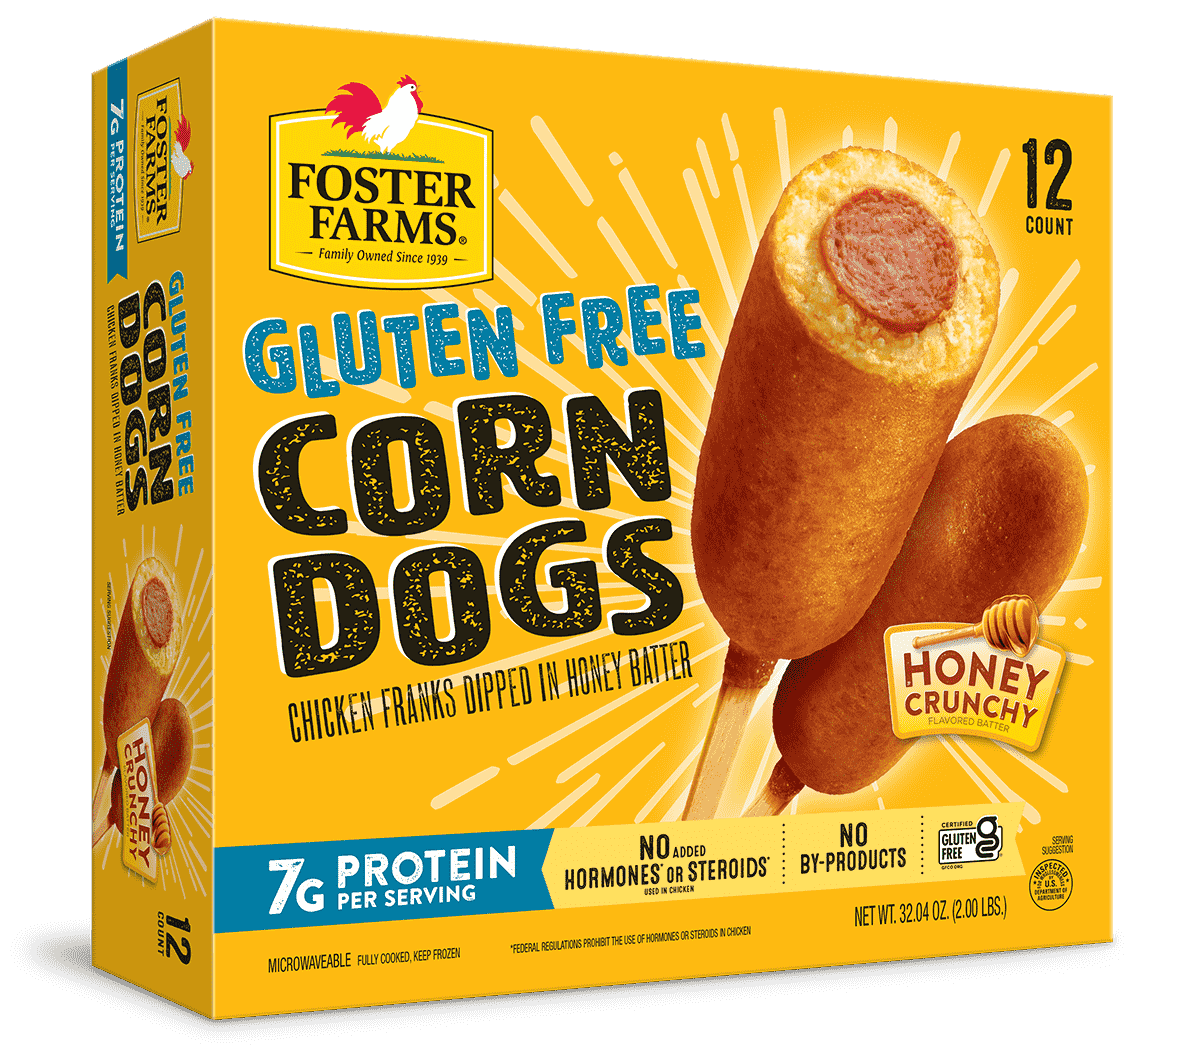 Gluten Free Corn Dogs Honey Crunchy 12 ct